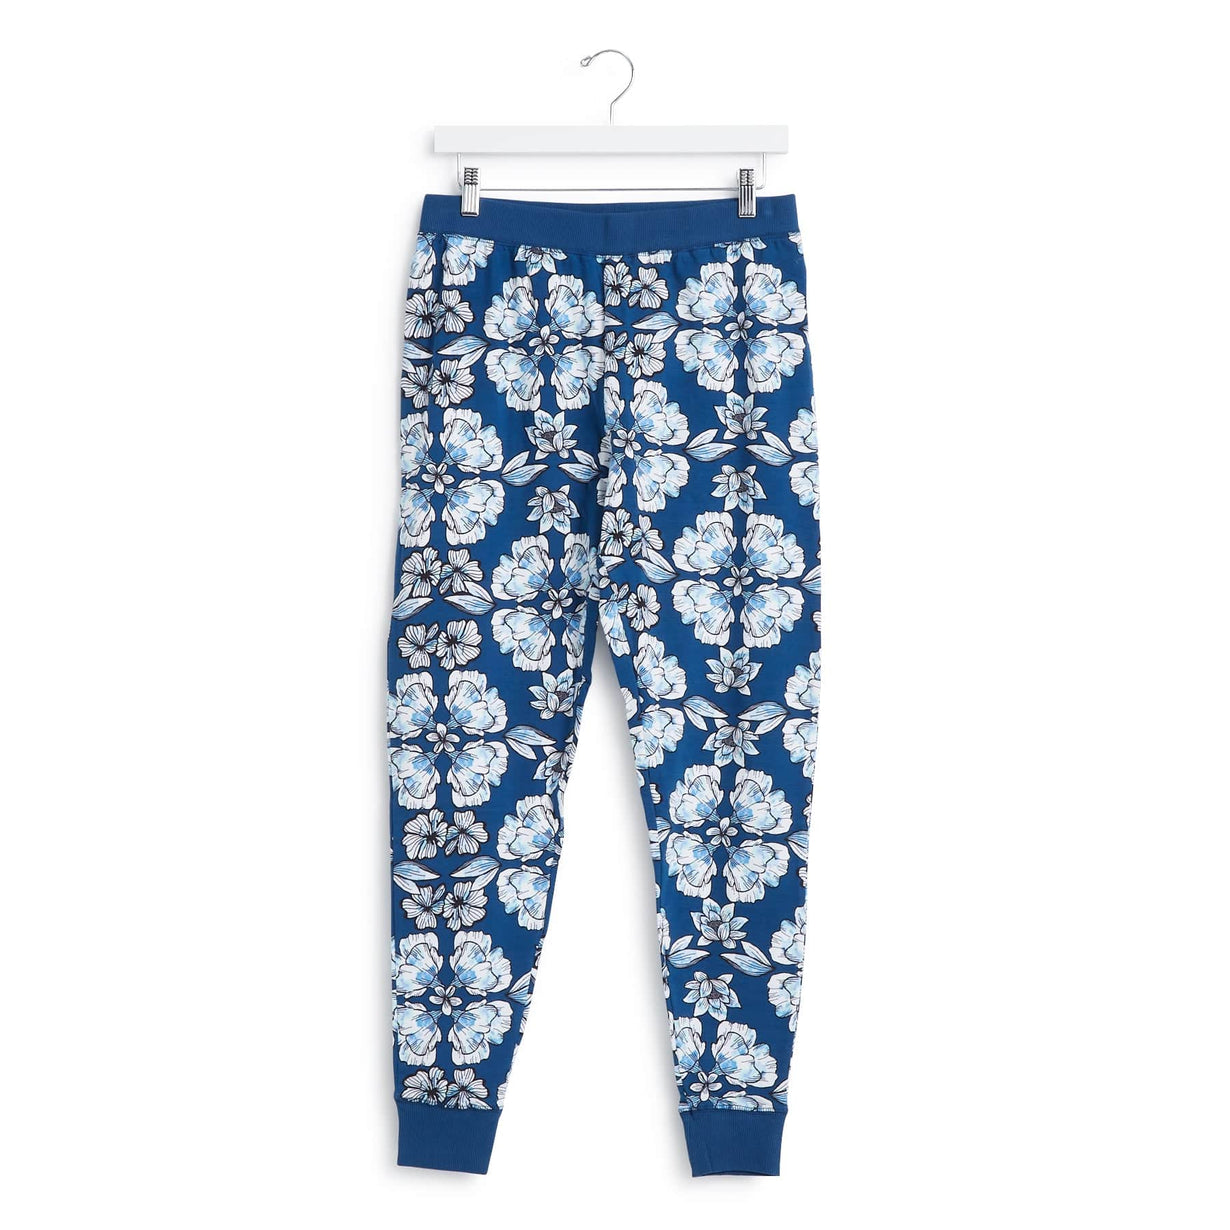 Vera Bradley Outlet  Jogger Pajama Pants - Knit Cotton/Spandex